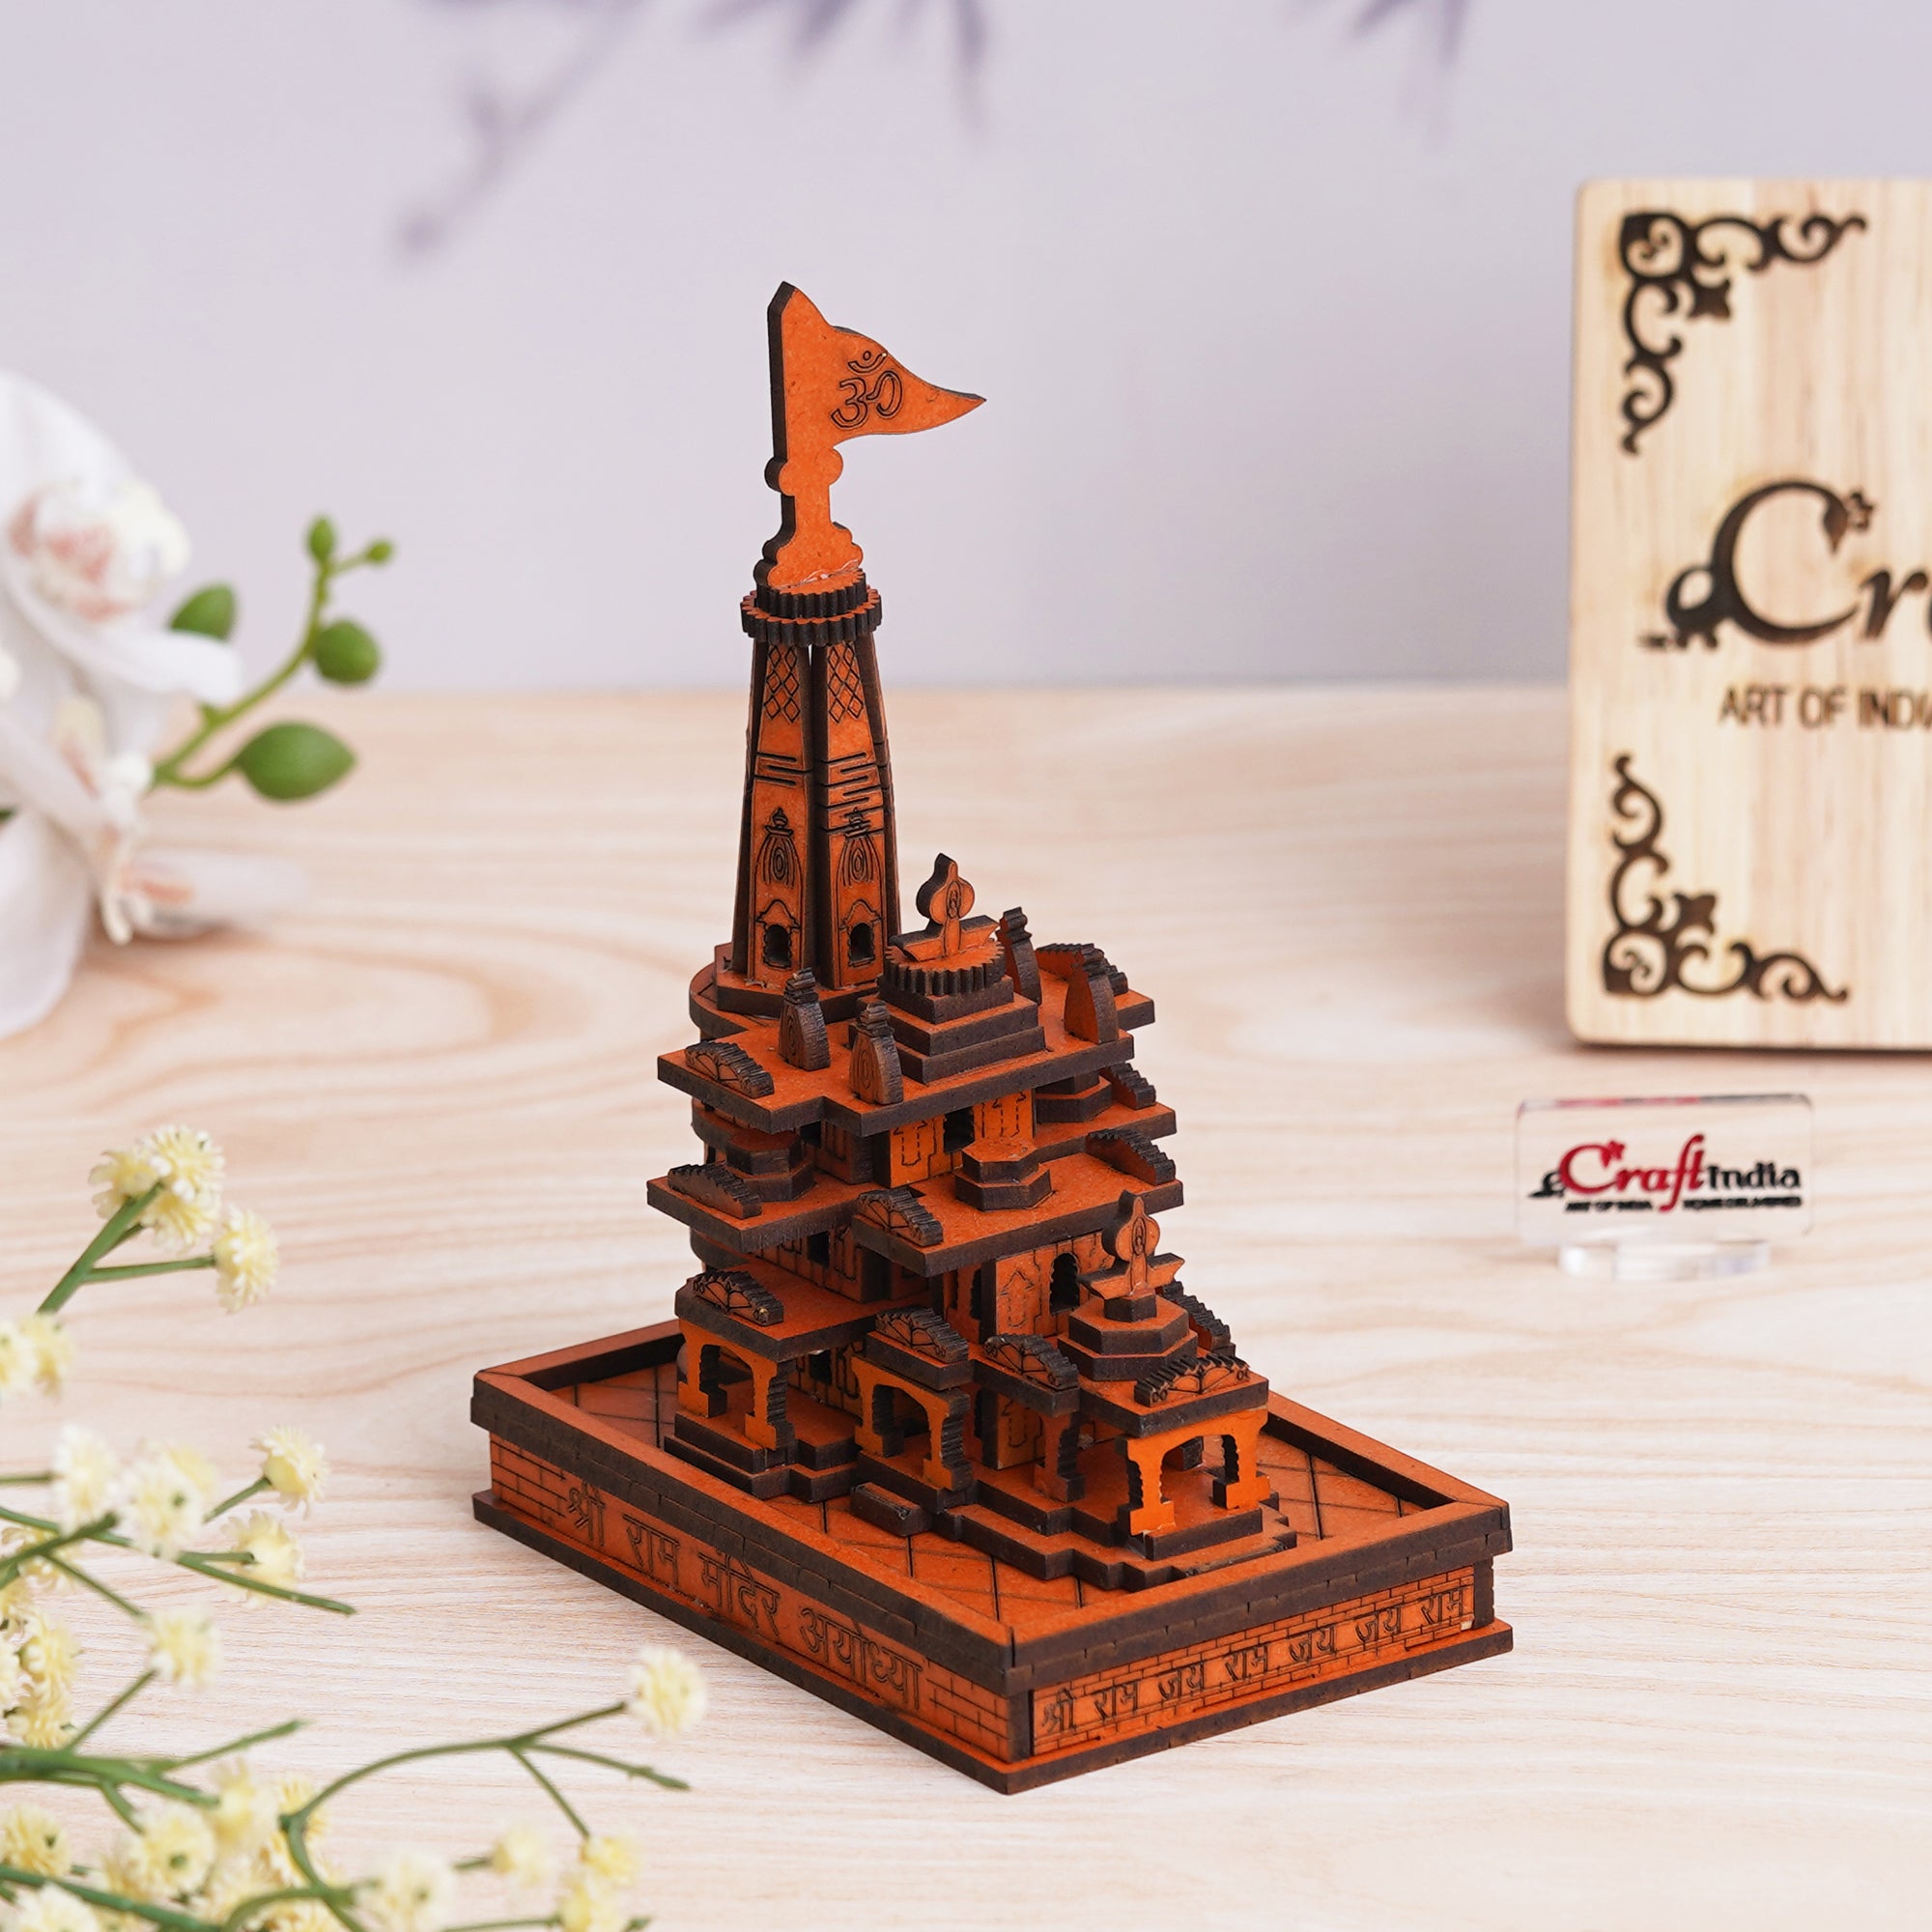 eCraftIndia Shri Ram Mandir Ayodhya Model - Wooden MDF Craftsmanship Authentic Designer Temple - Ideal for Home Temple, Decor, and Spiritual Gifting (Orange, Brown) 4